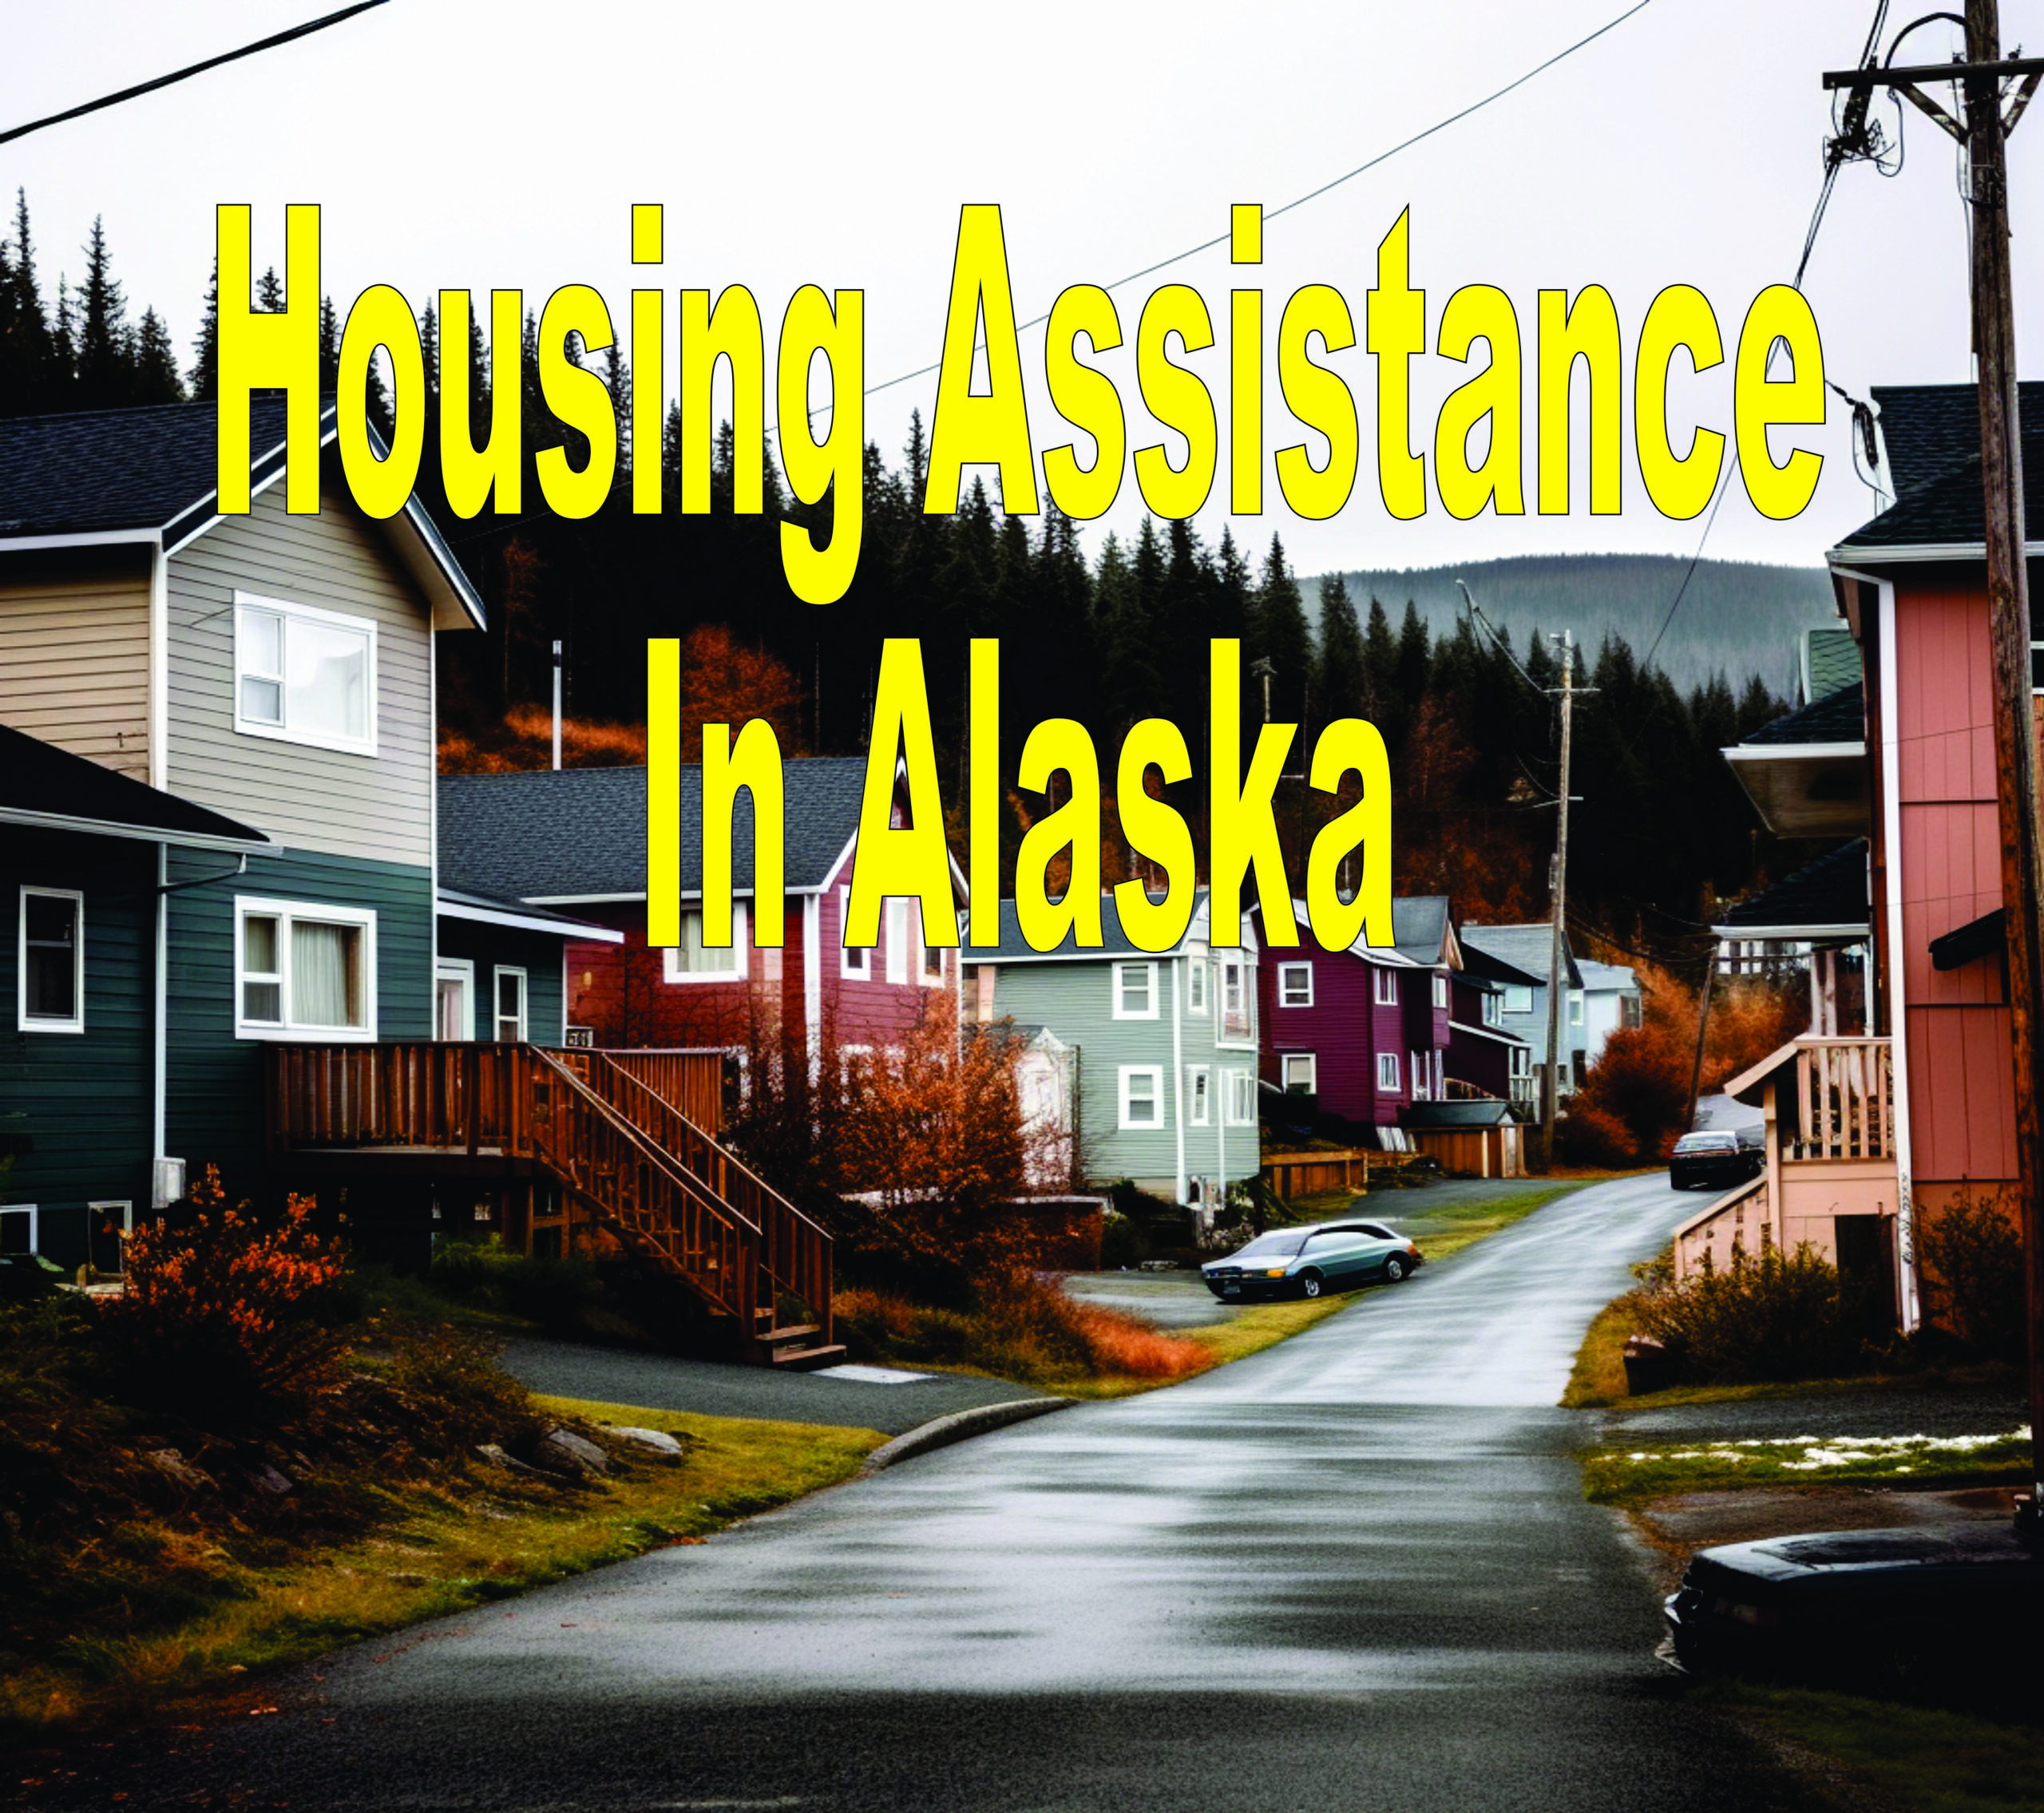 Housing Assistance In Alaska